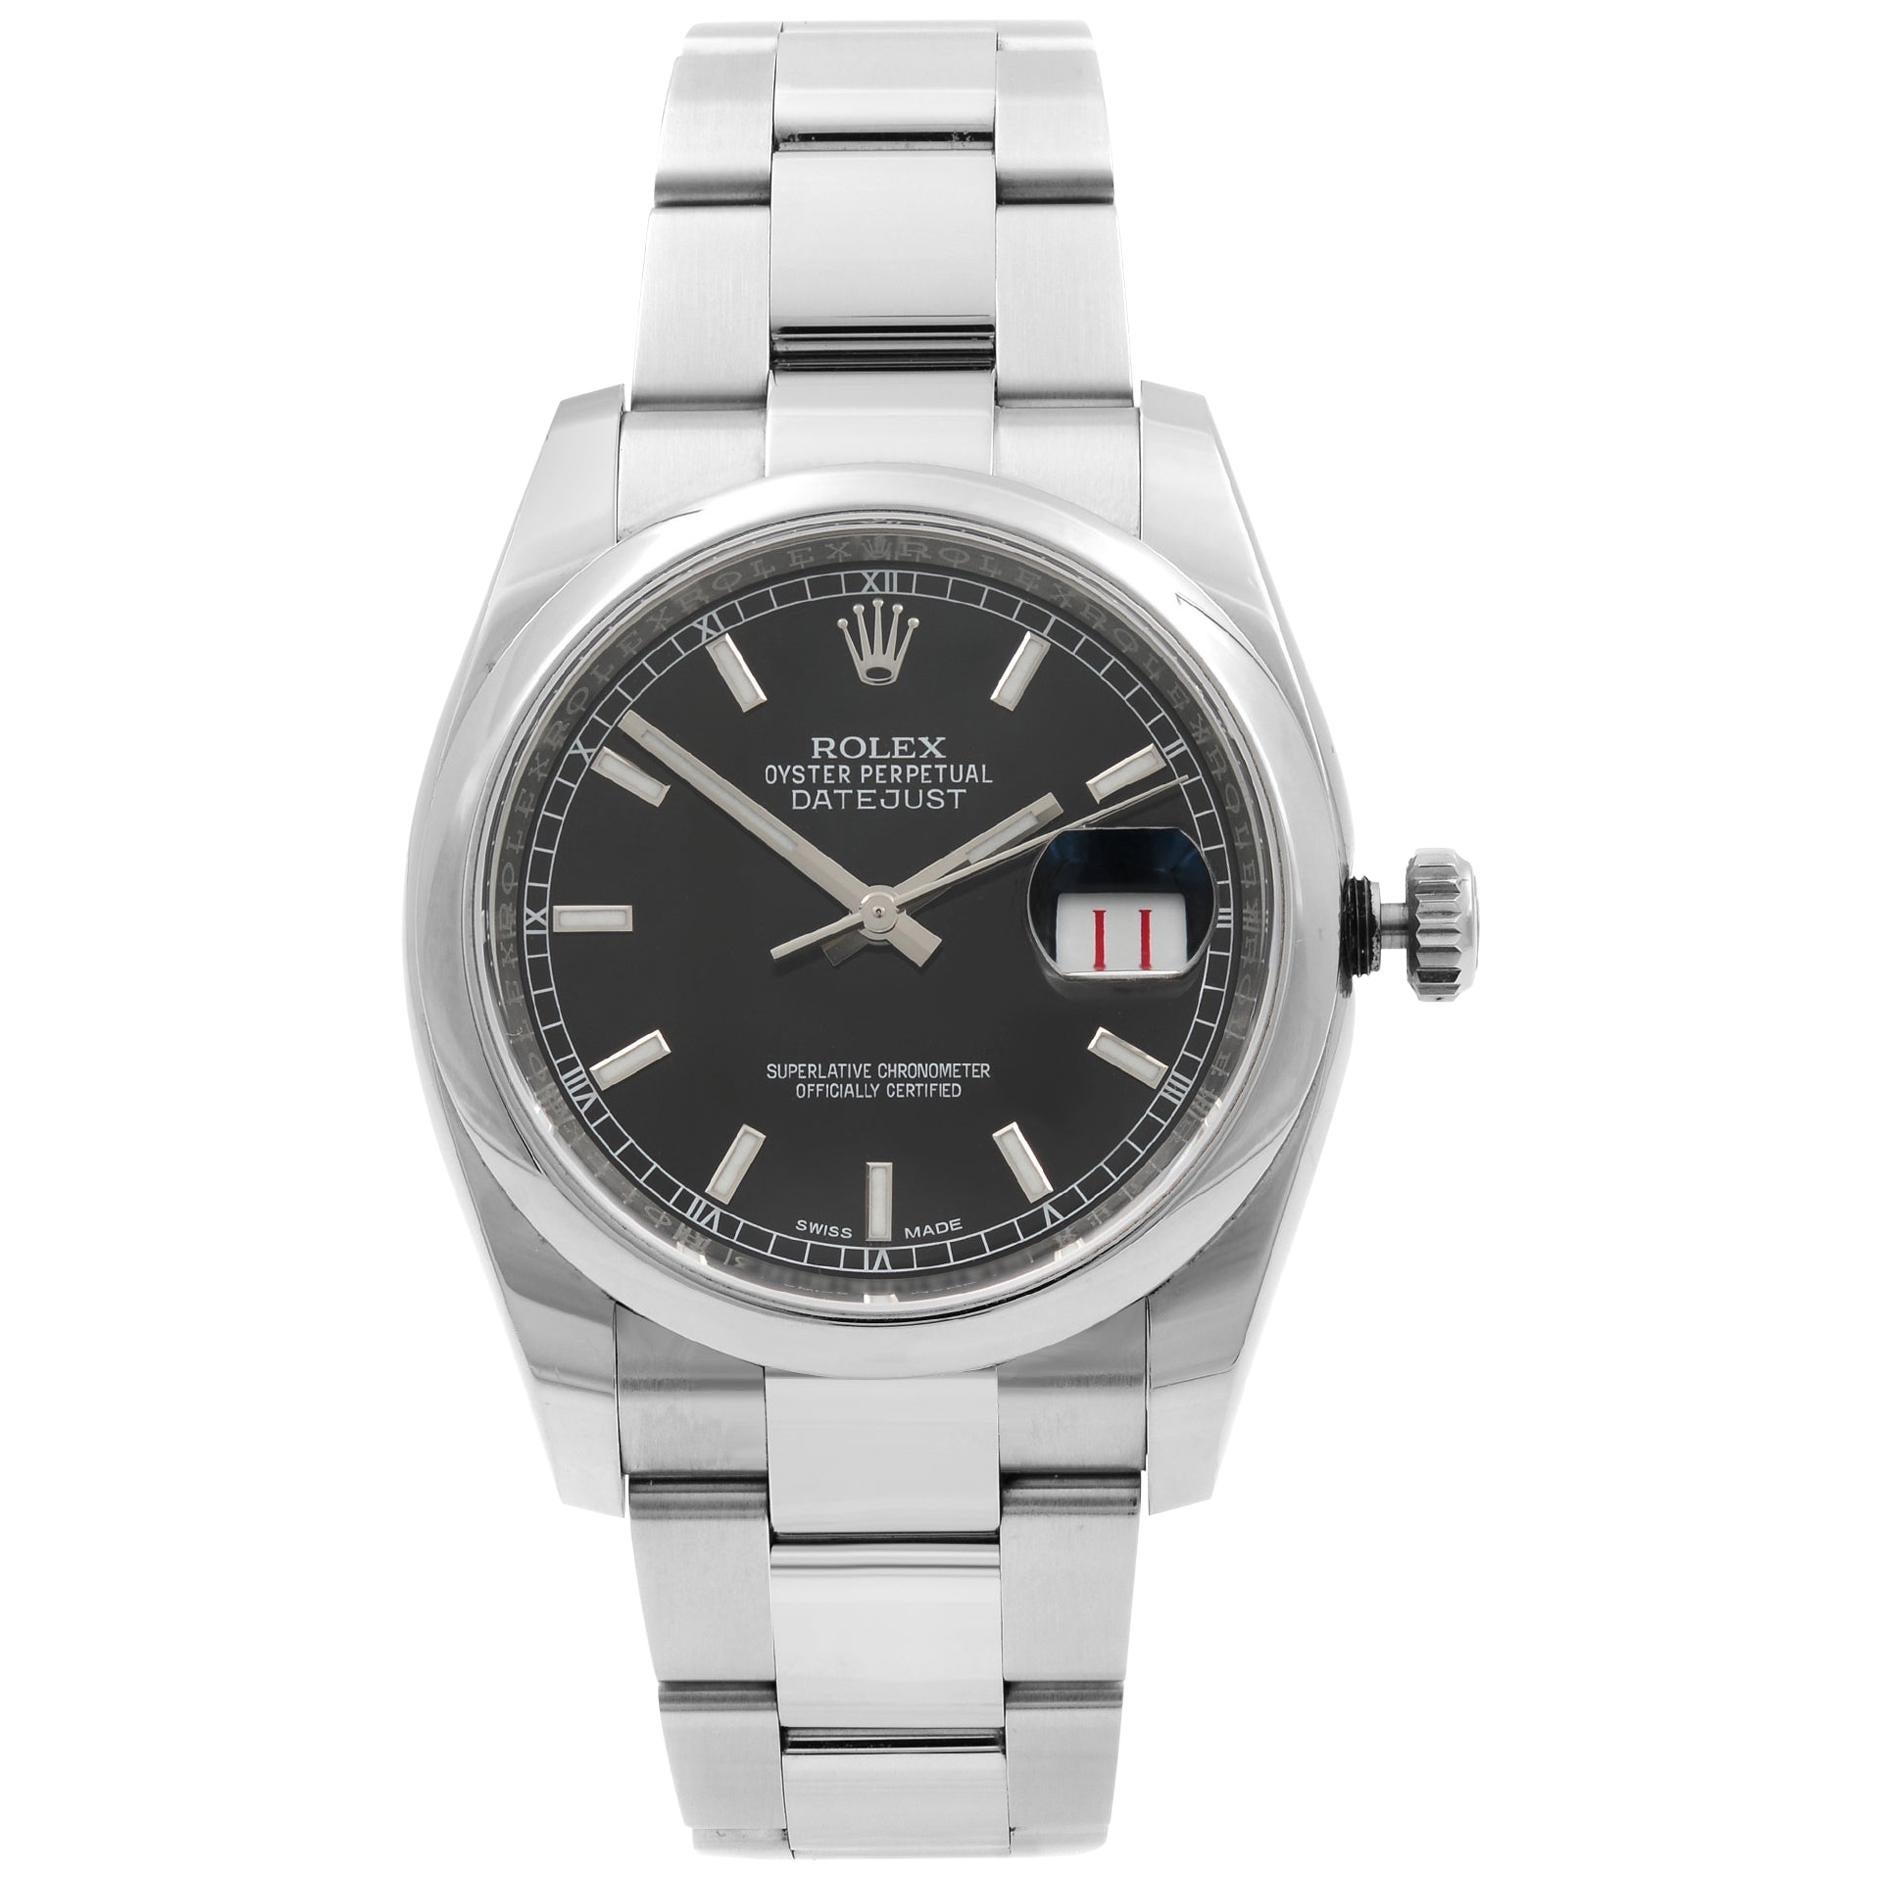 Rolex Datejust Roulette Date Steel Black Dial Automatic Men's Watch 116200